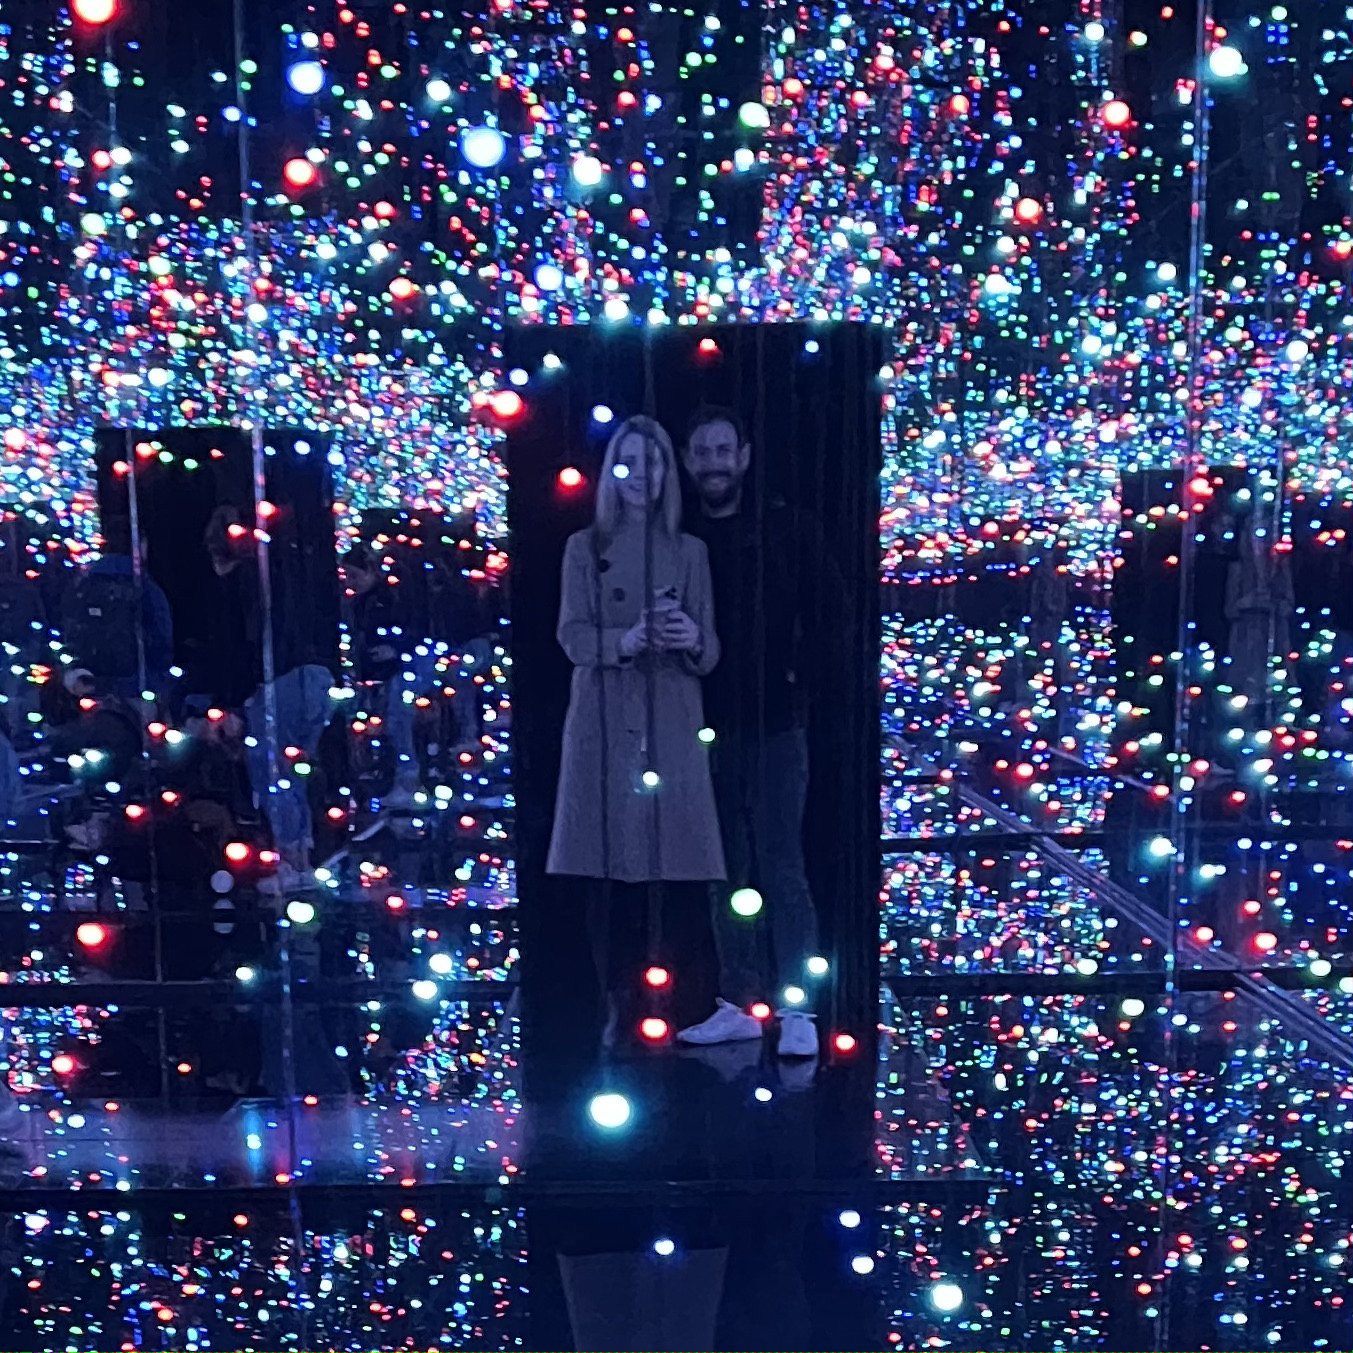 Yayoi Kusama Infinity Mirror Room at The Tate